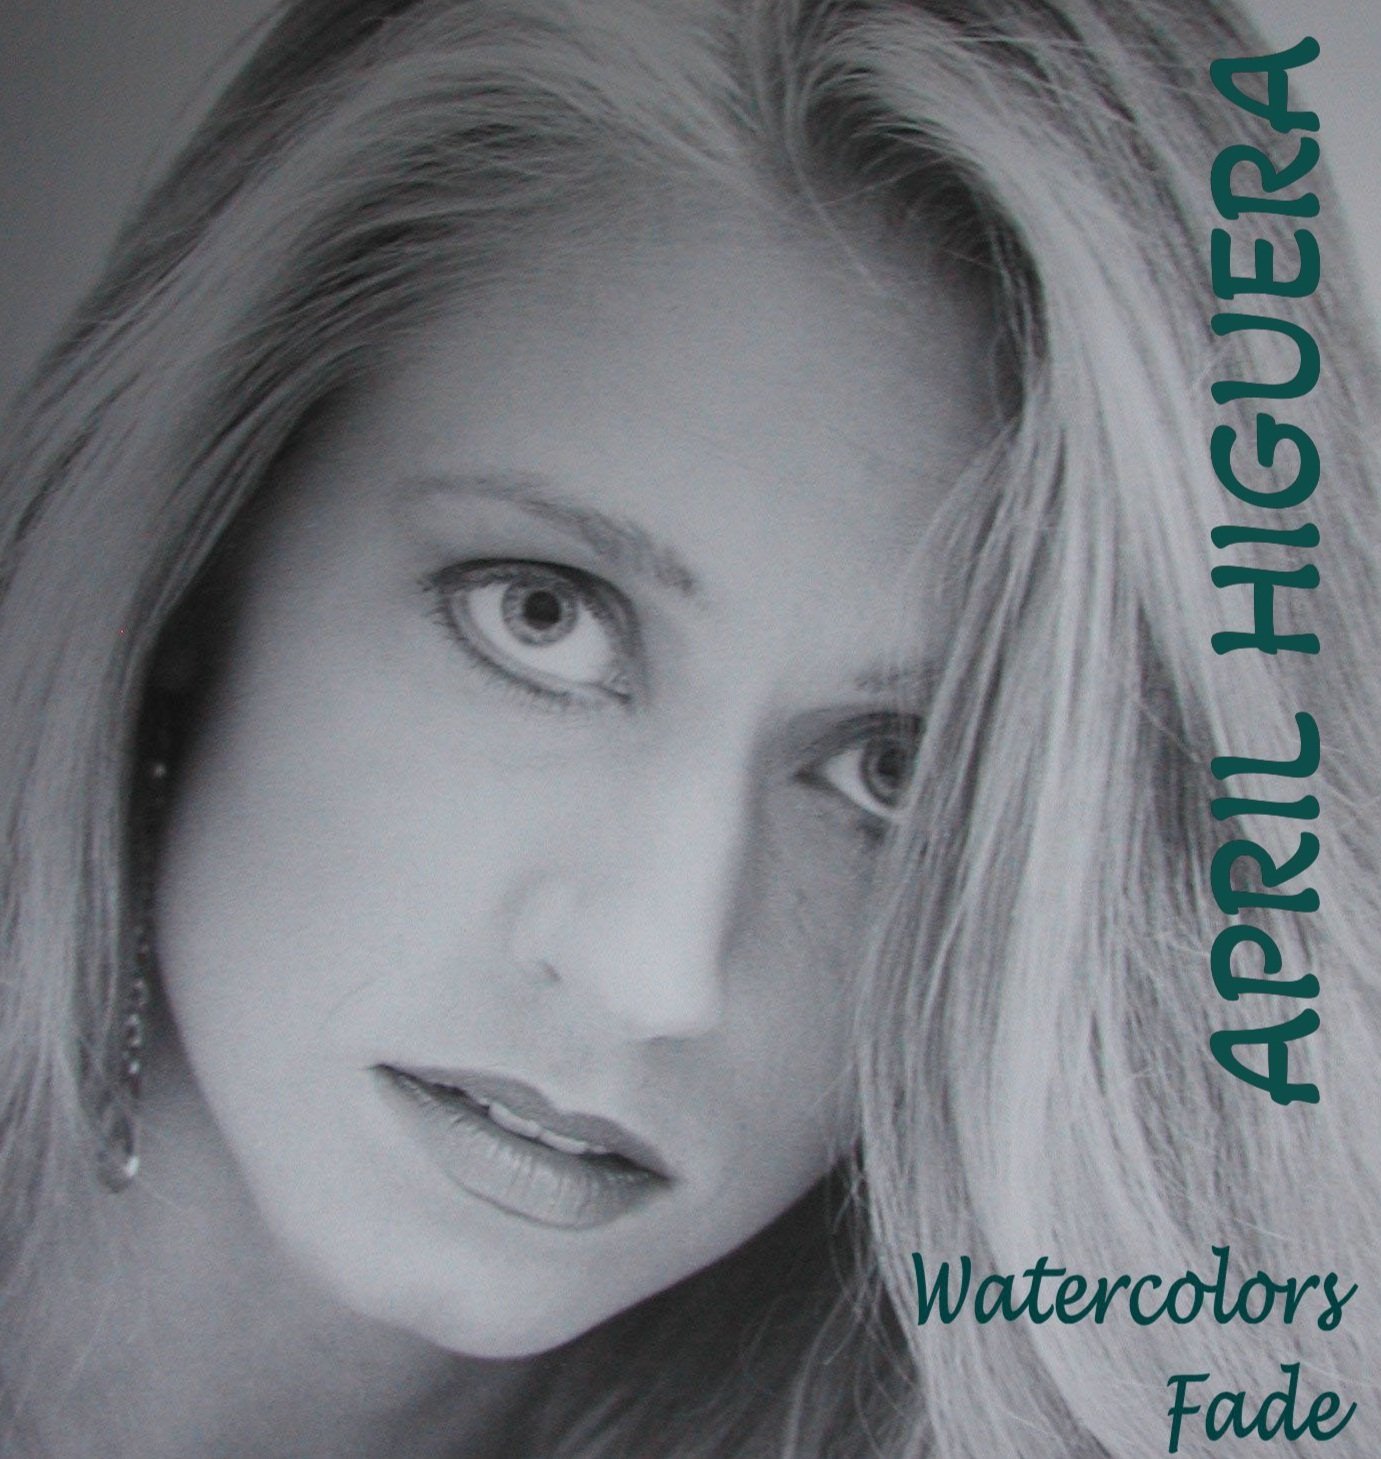 WATERCOLORS FADE - April Higuera (CD no longer available)